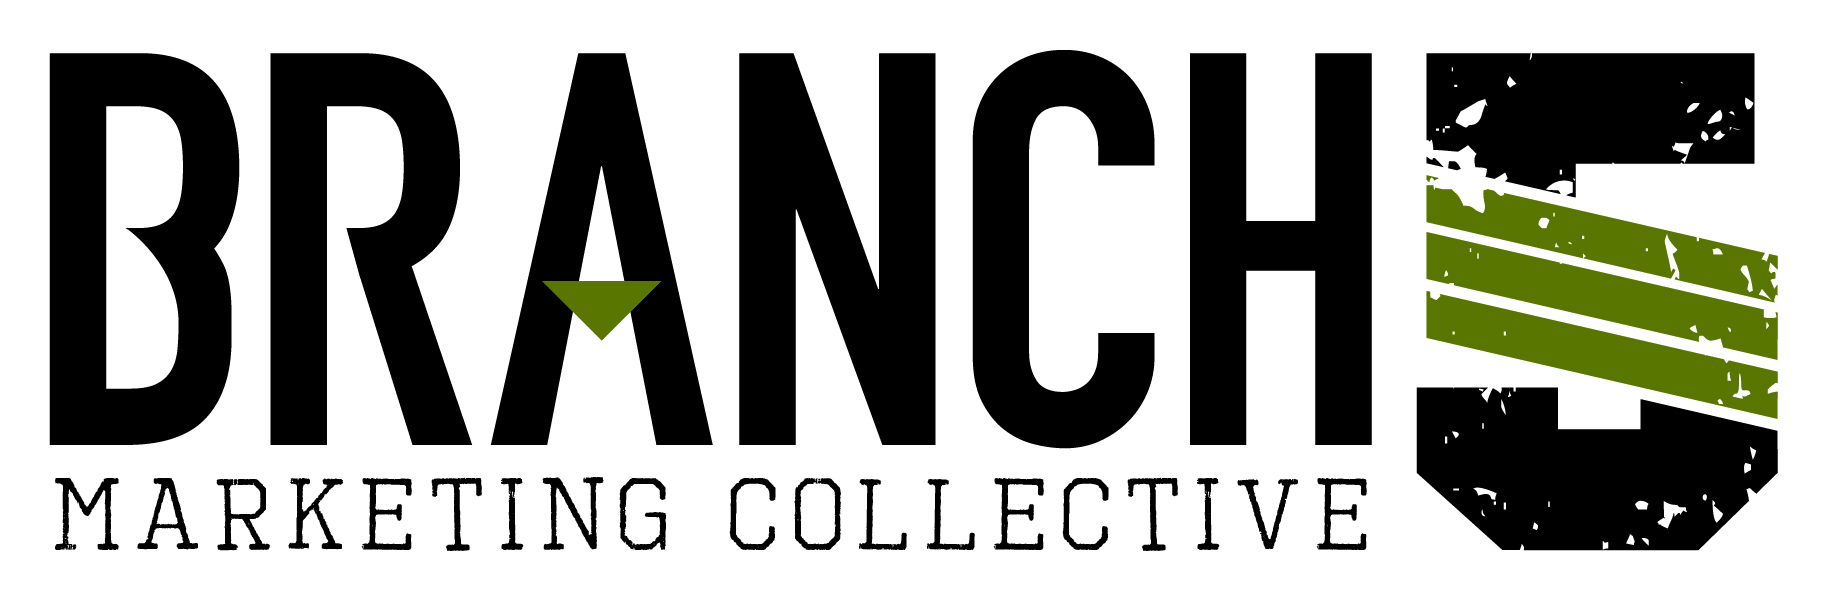 Branch 5 Marketing Collective LLC